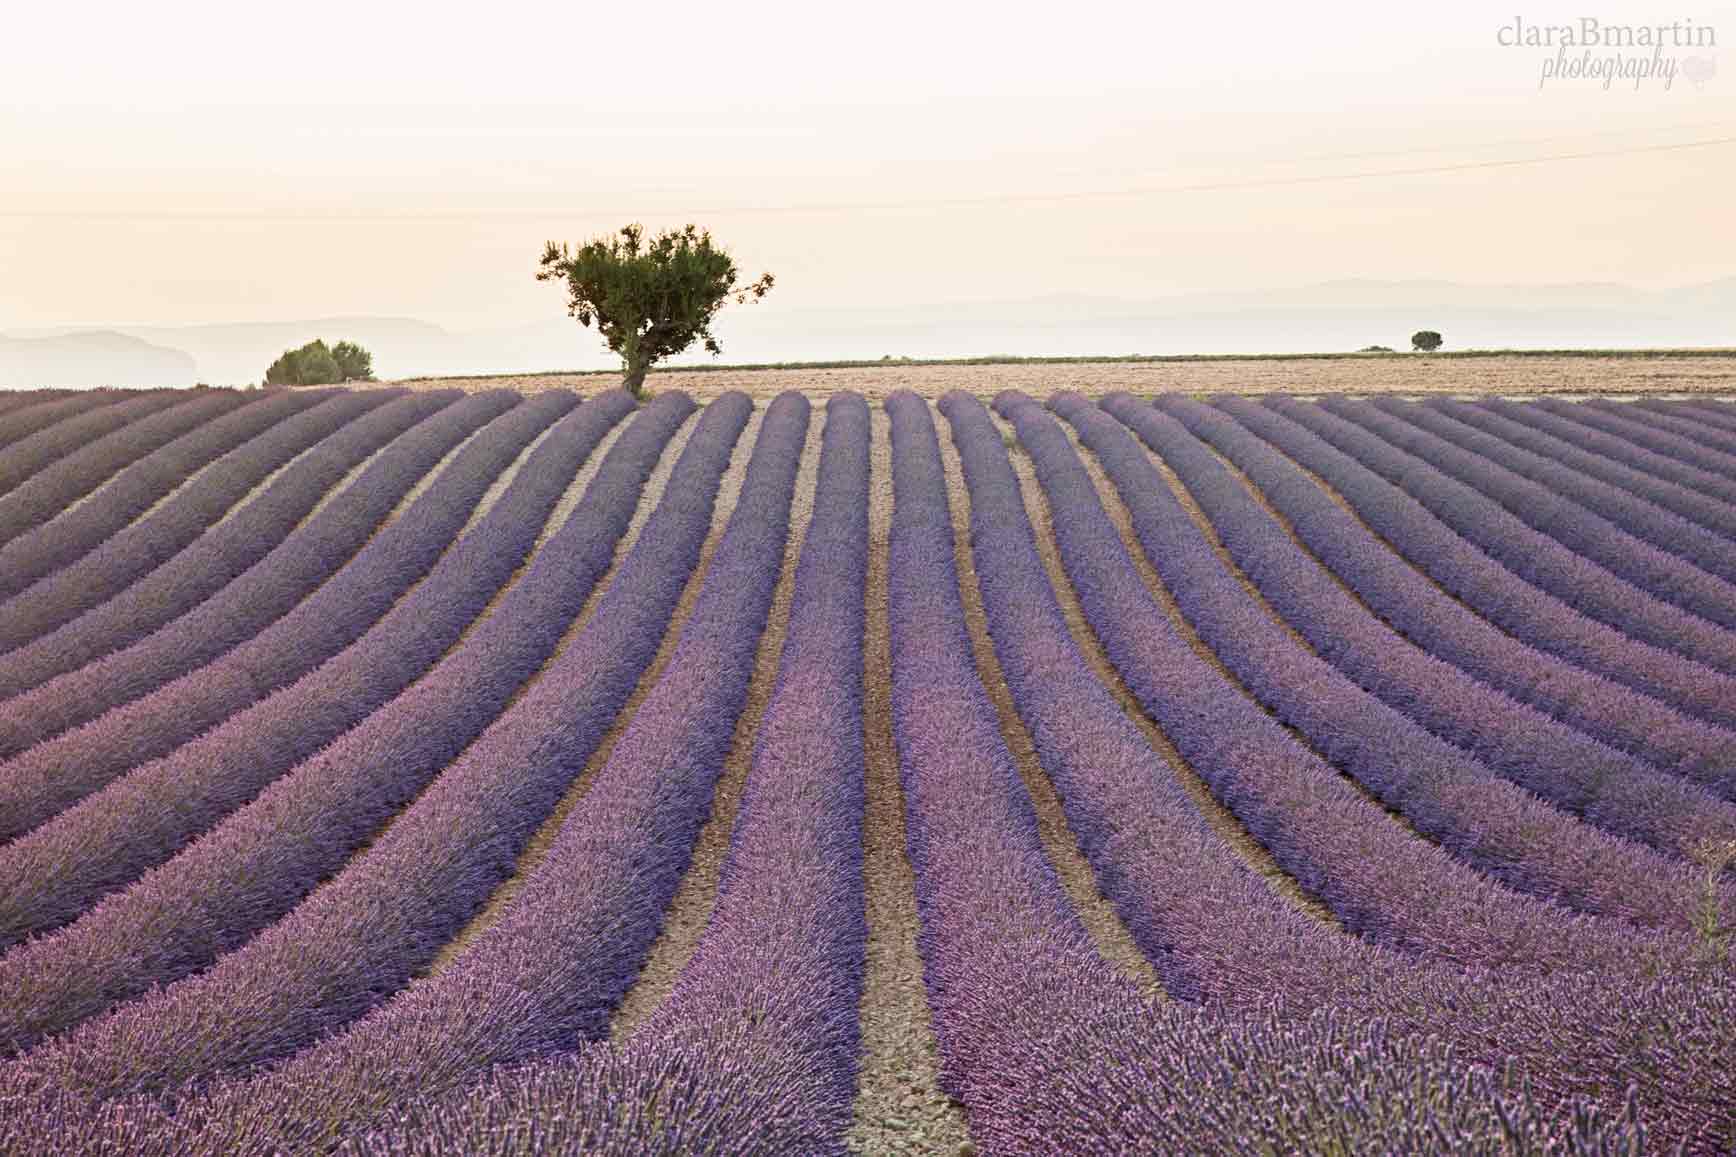 Lavender-fields-Provence-claraBmartin14